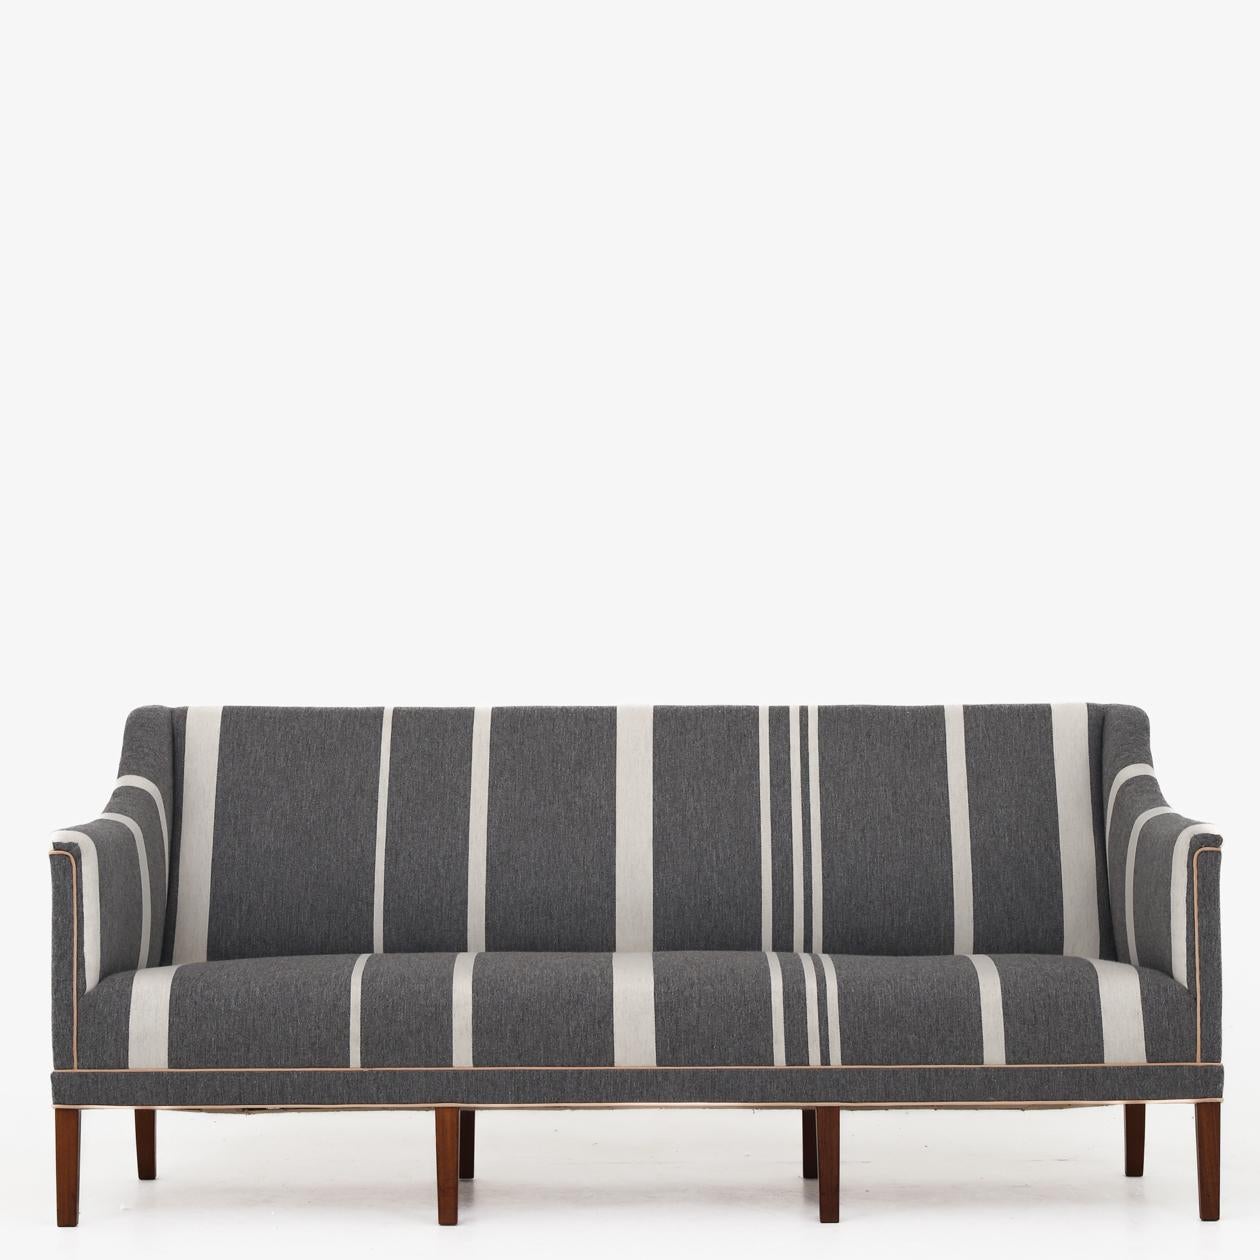 KK 6092 sofa by Kaare Klint In Good Condition For Sale In Copenhagen, DK